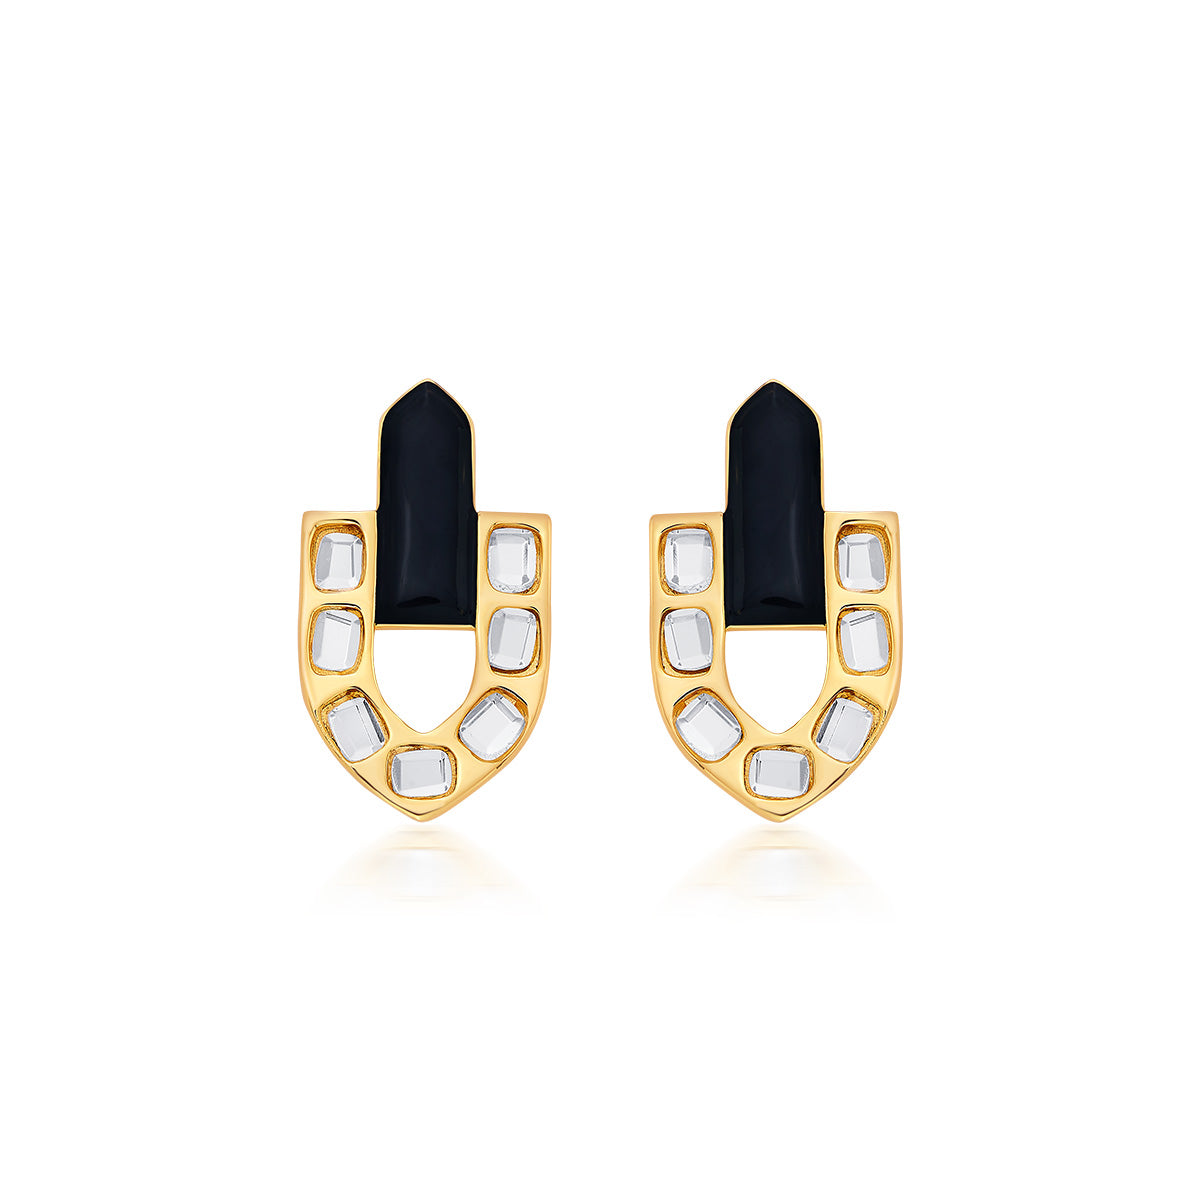 Just Jamiti Art Deco Earrings - Isharya | Modern Indian Jewelry